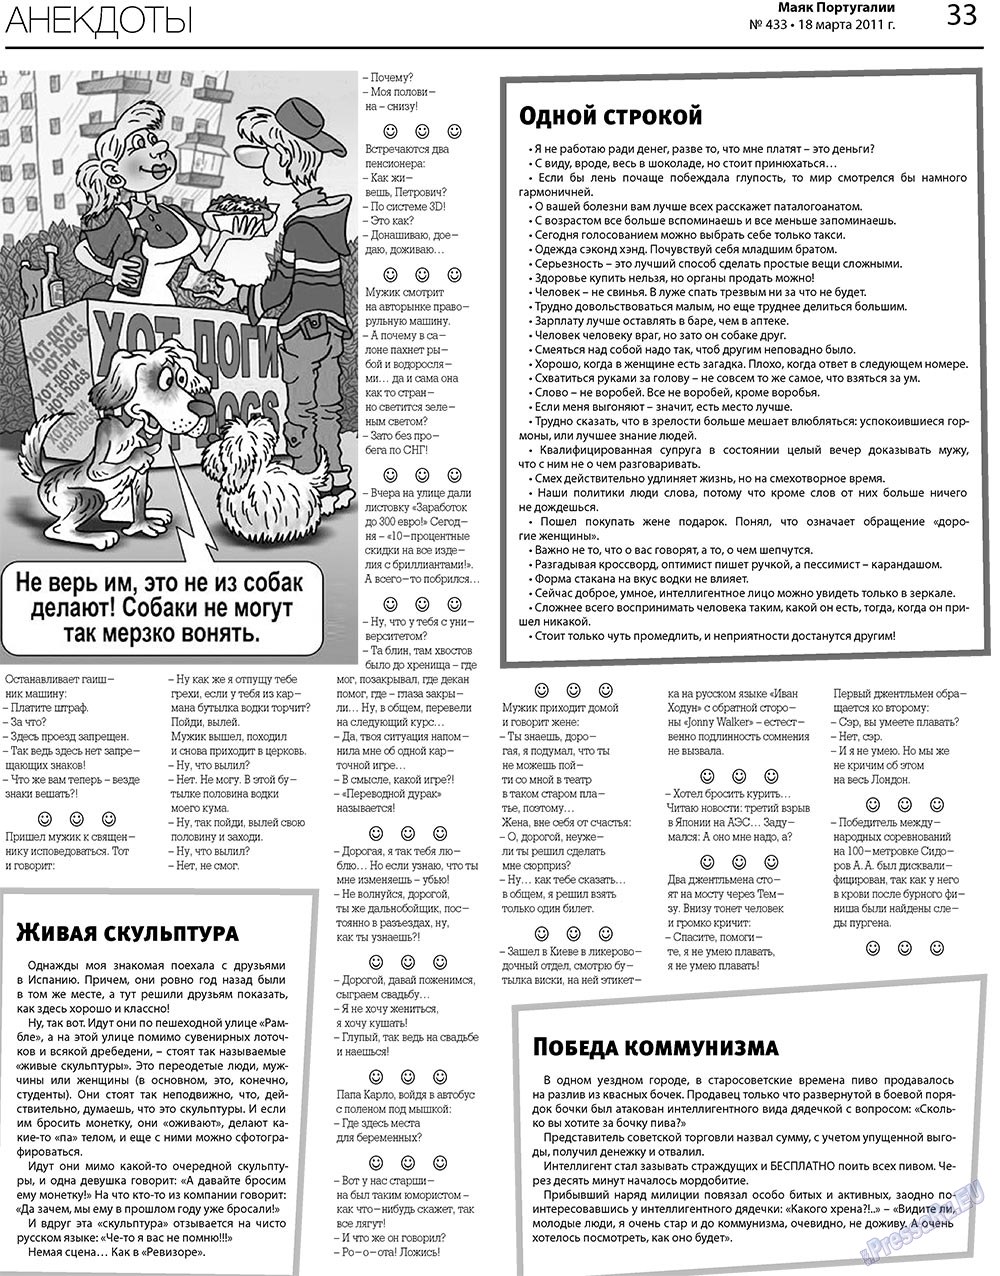 Маяк Португалии, газета. 2011 №433 стр.33